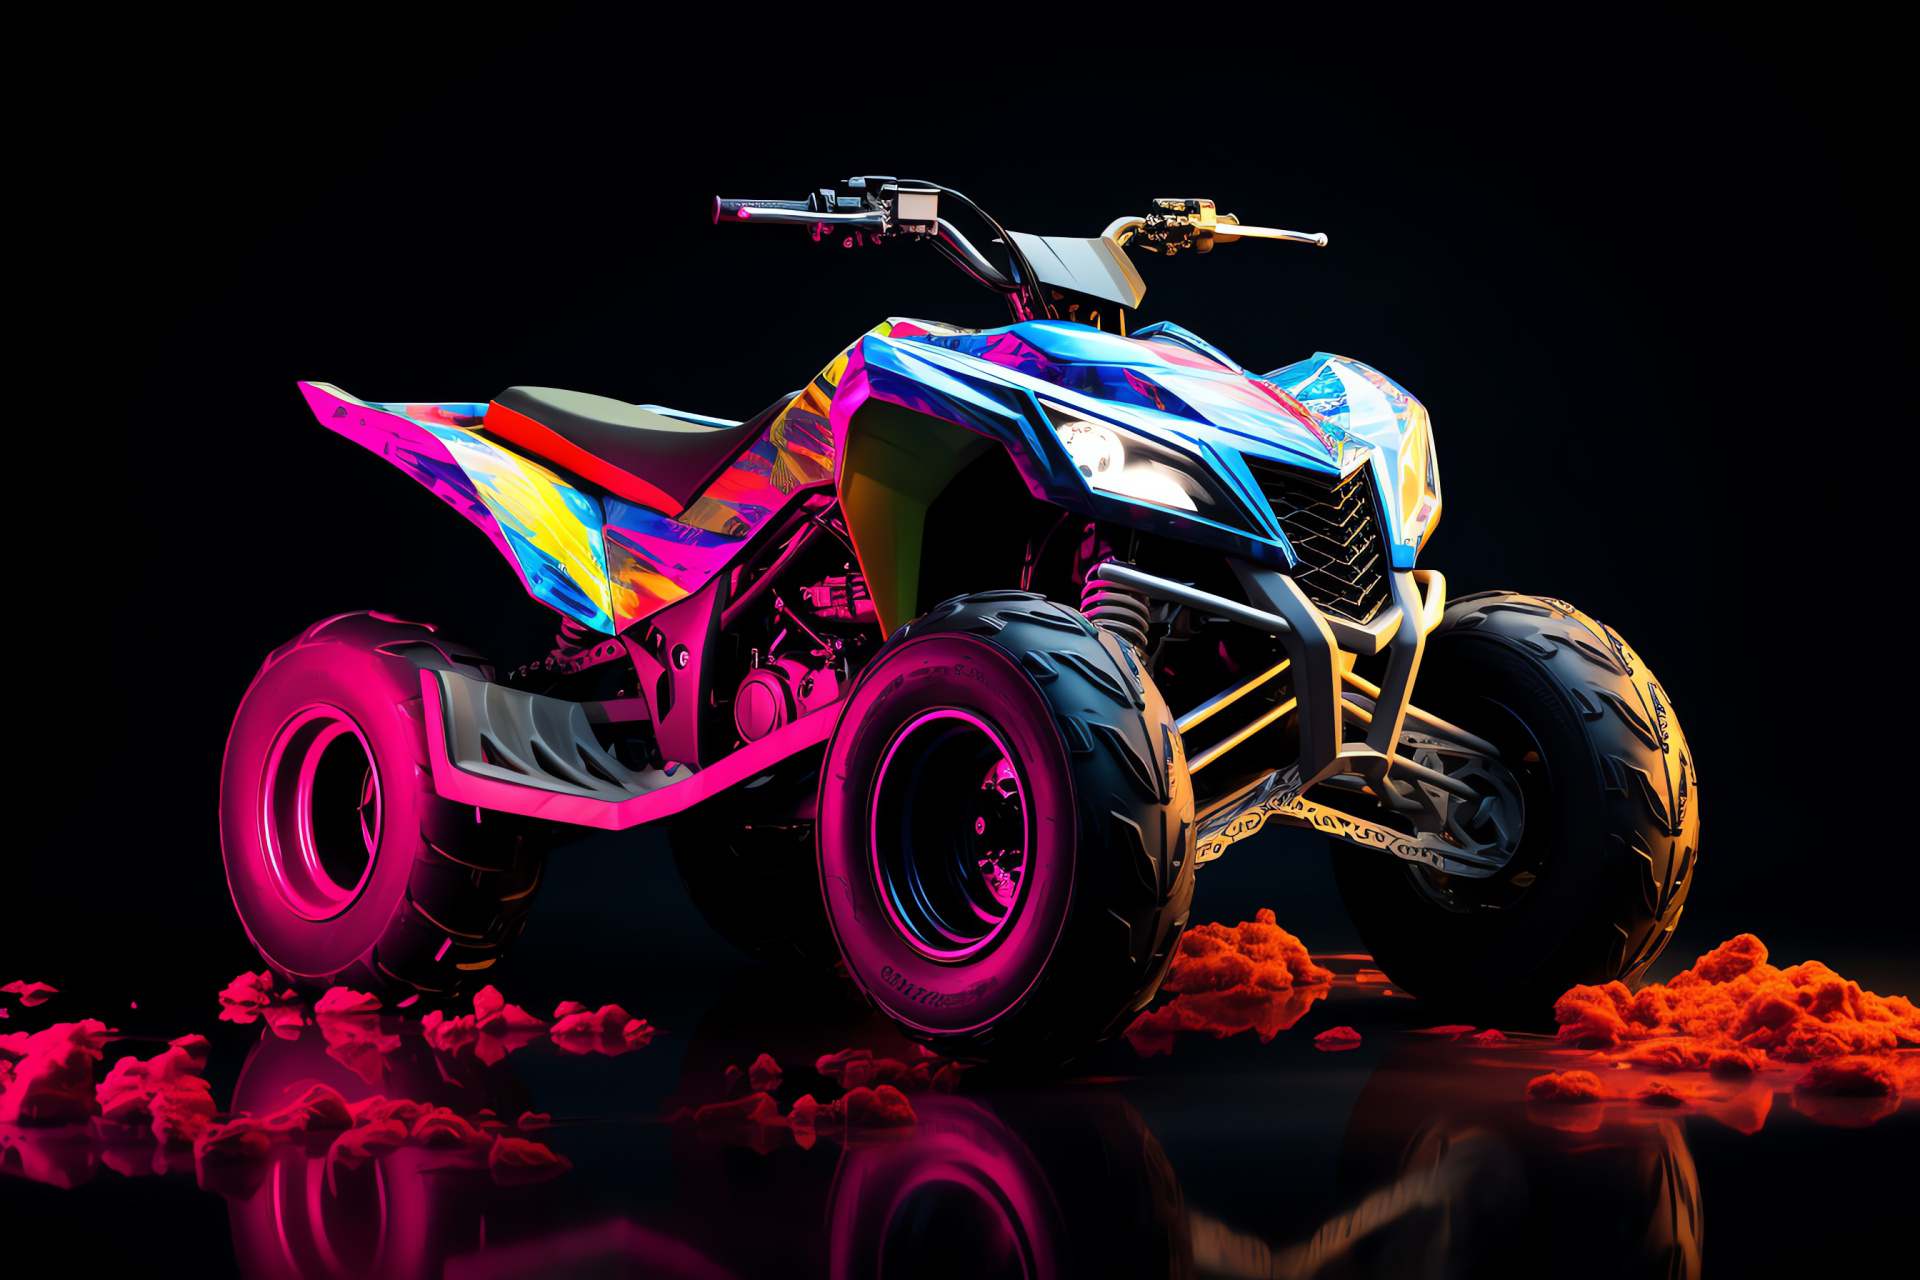 Raptor 700 quad, Multicolor backdrop spectrum, Prominent neon aesthetic, Light play, ATV showcase, HD Desktop Wallpaper